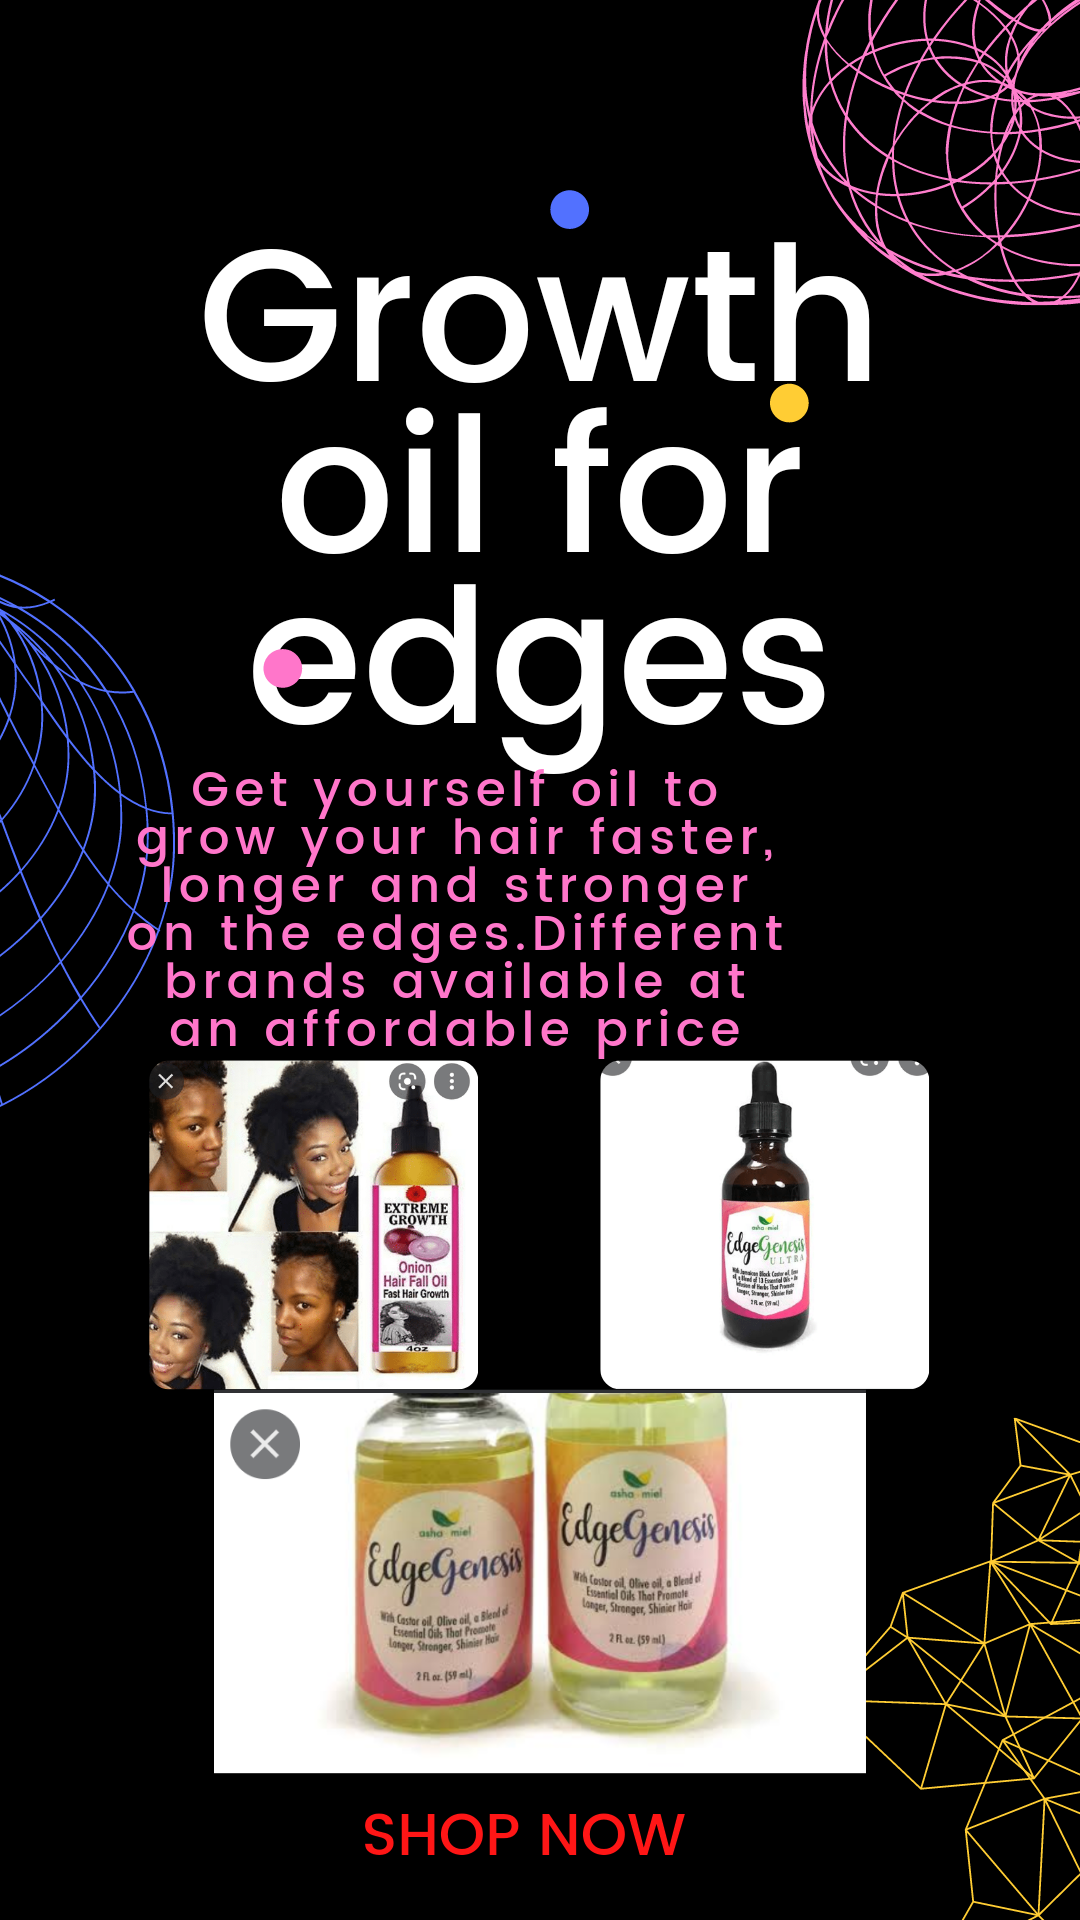 Growth oil for edges on sale